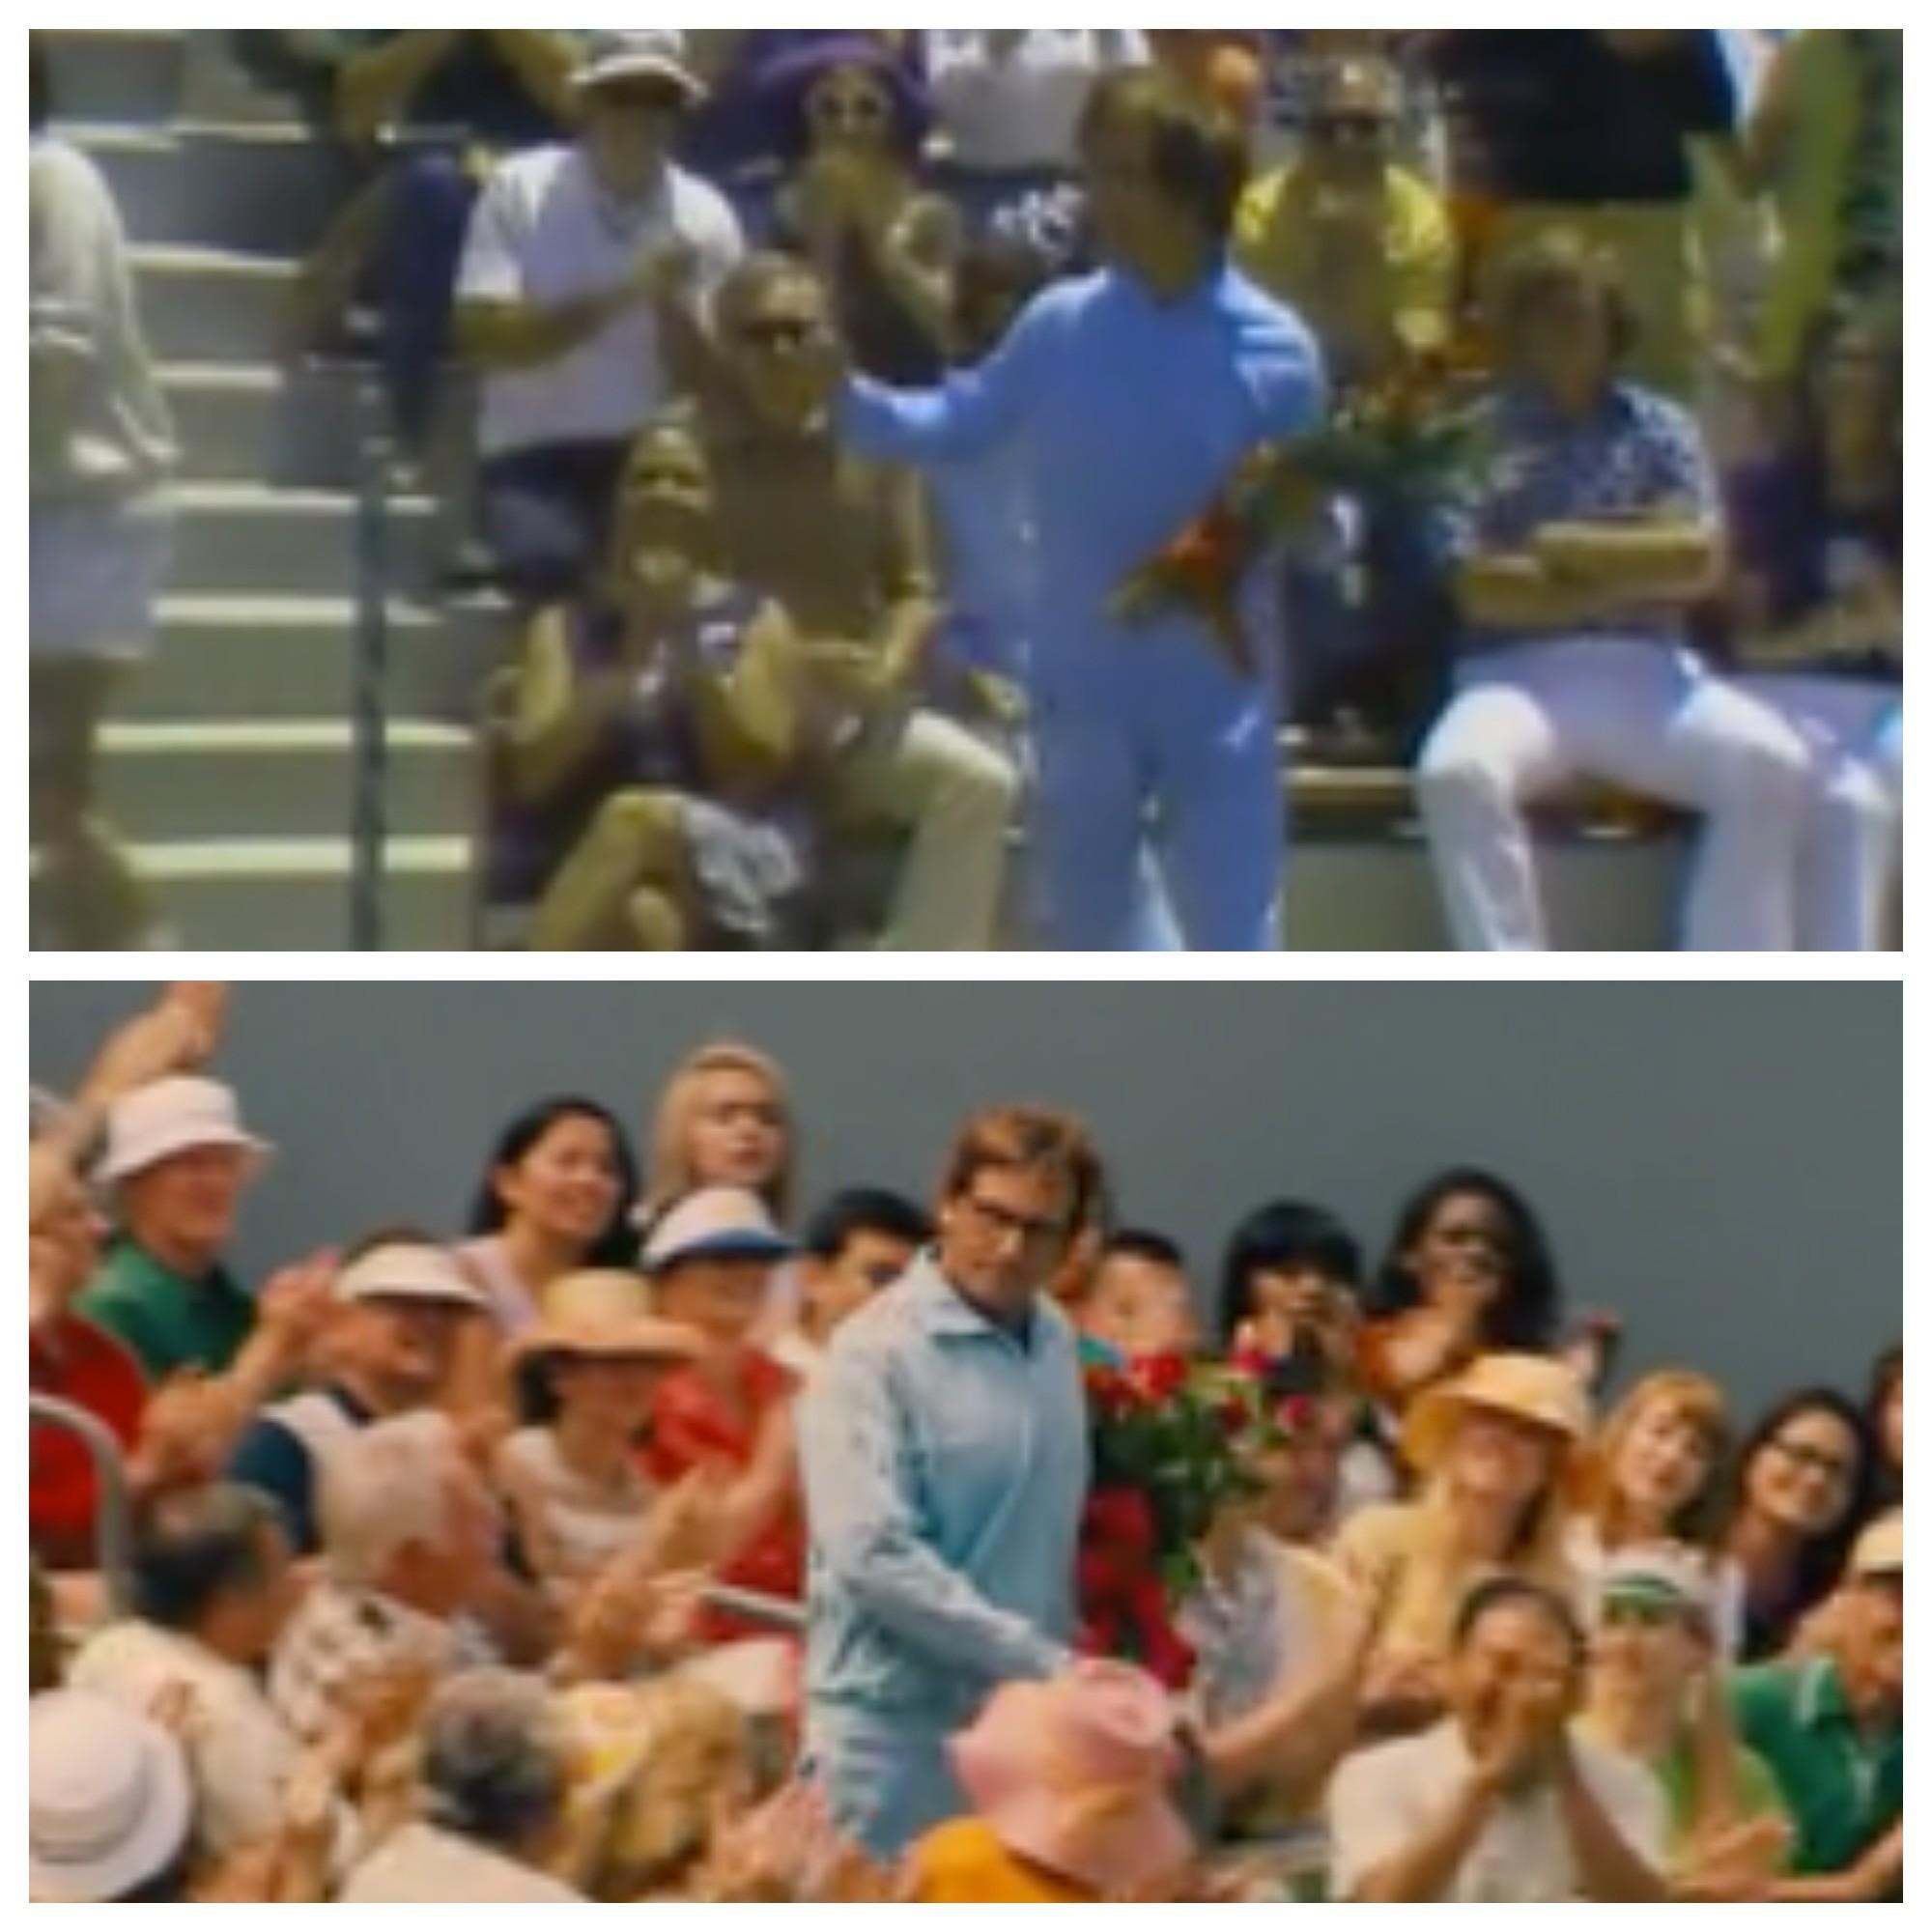 Бобби Риггс на теннисном корте (выше), кадр из фильма со Стивом Кэреллом 2017 года (ниже).